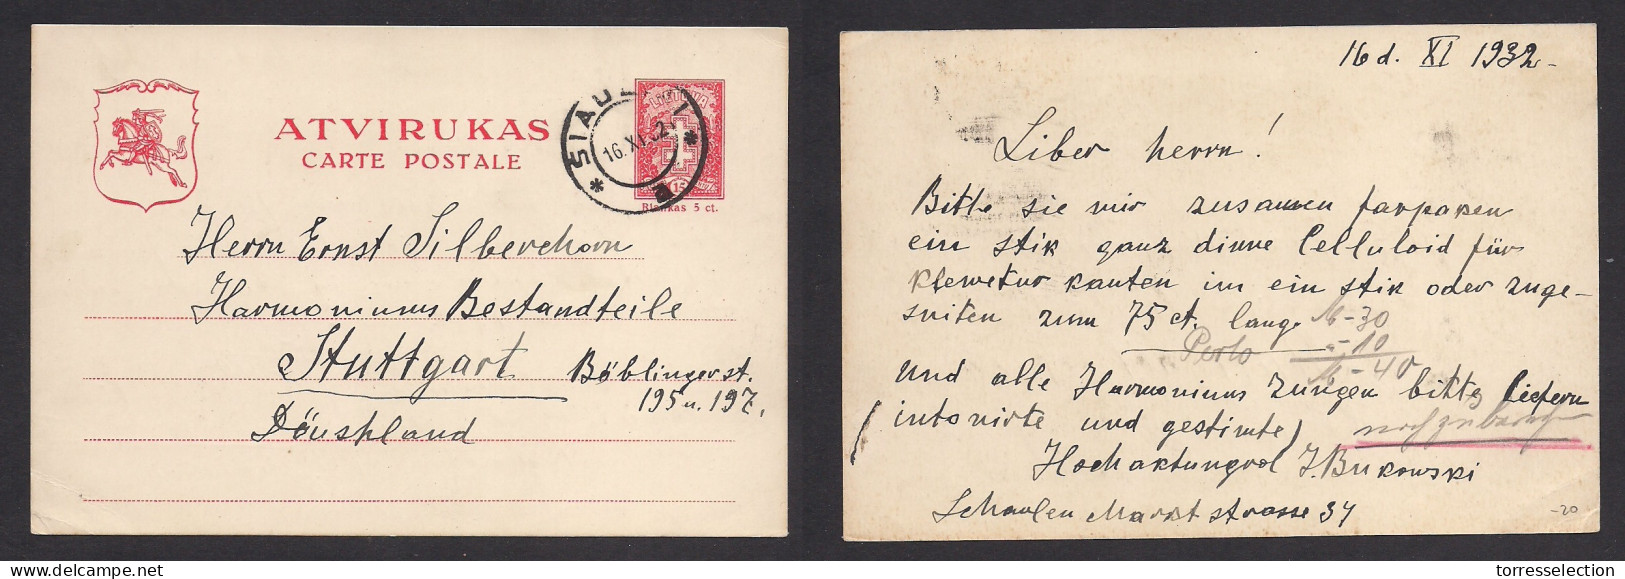 LITHUANIA. 1932 (16 Nov) SIAULIAI - Stuttgart, Germany. 5c Red Stat Card. Fine Used. XSALE. - Litauen